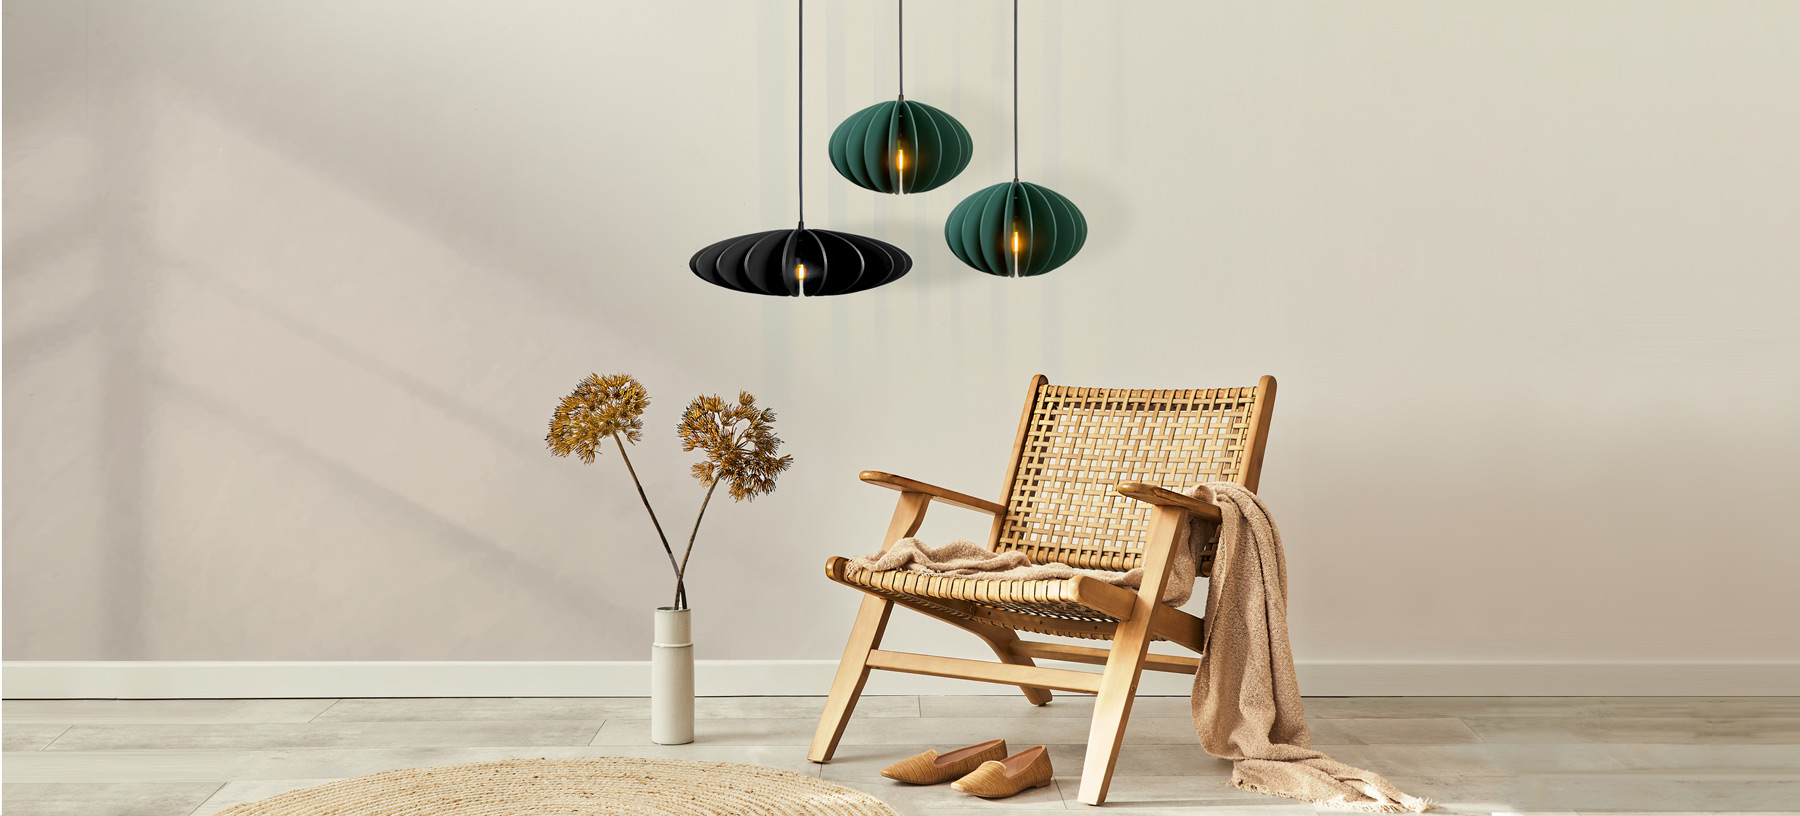 Modern cozy lighting, three pendants lights create the desired warm interior atmosphere, multi-colored